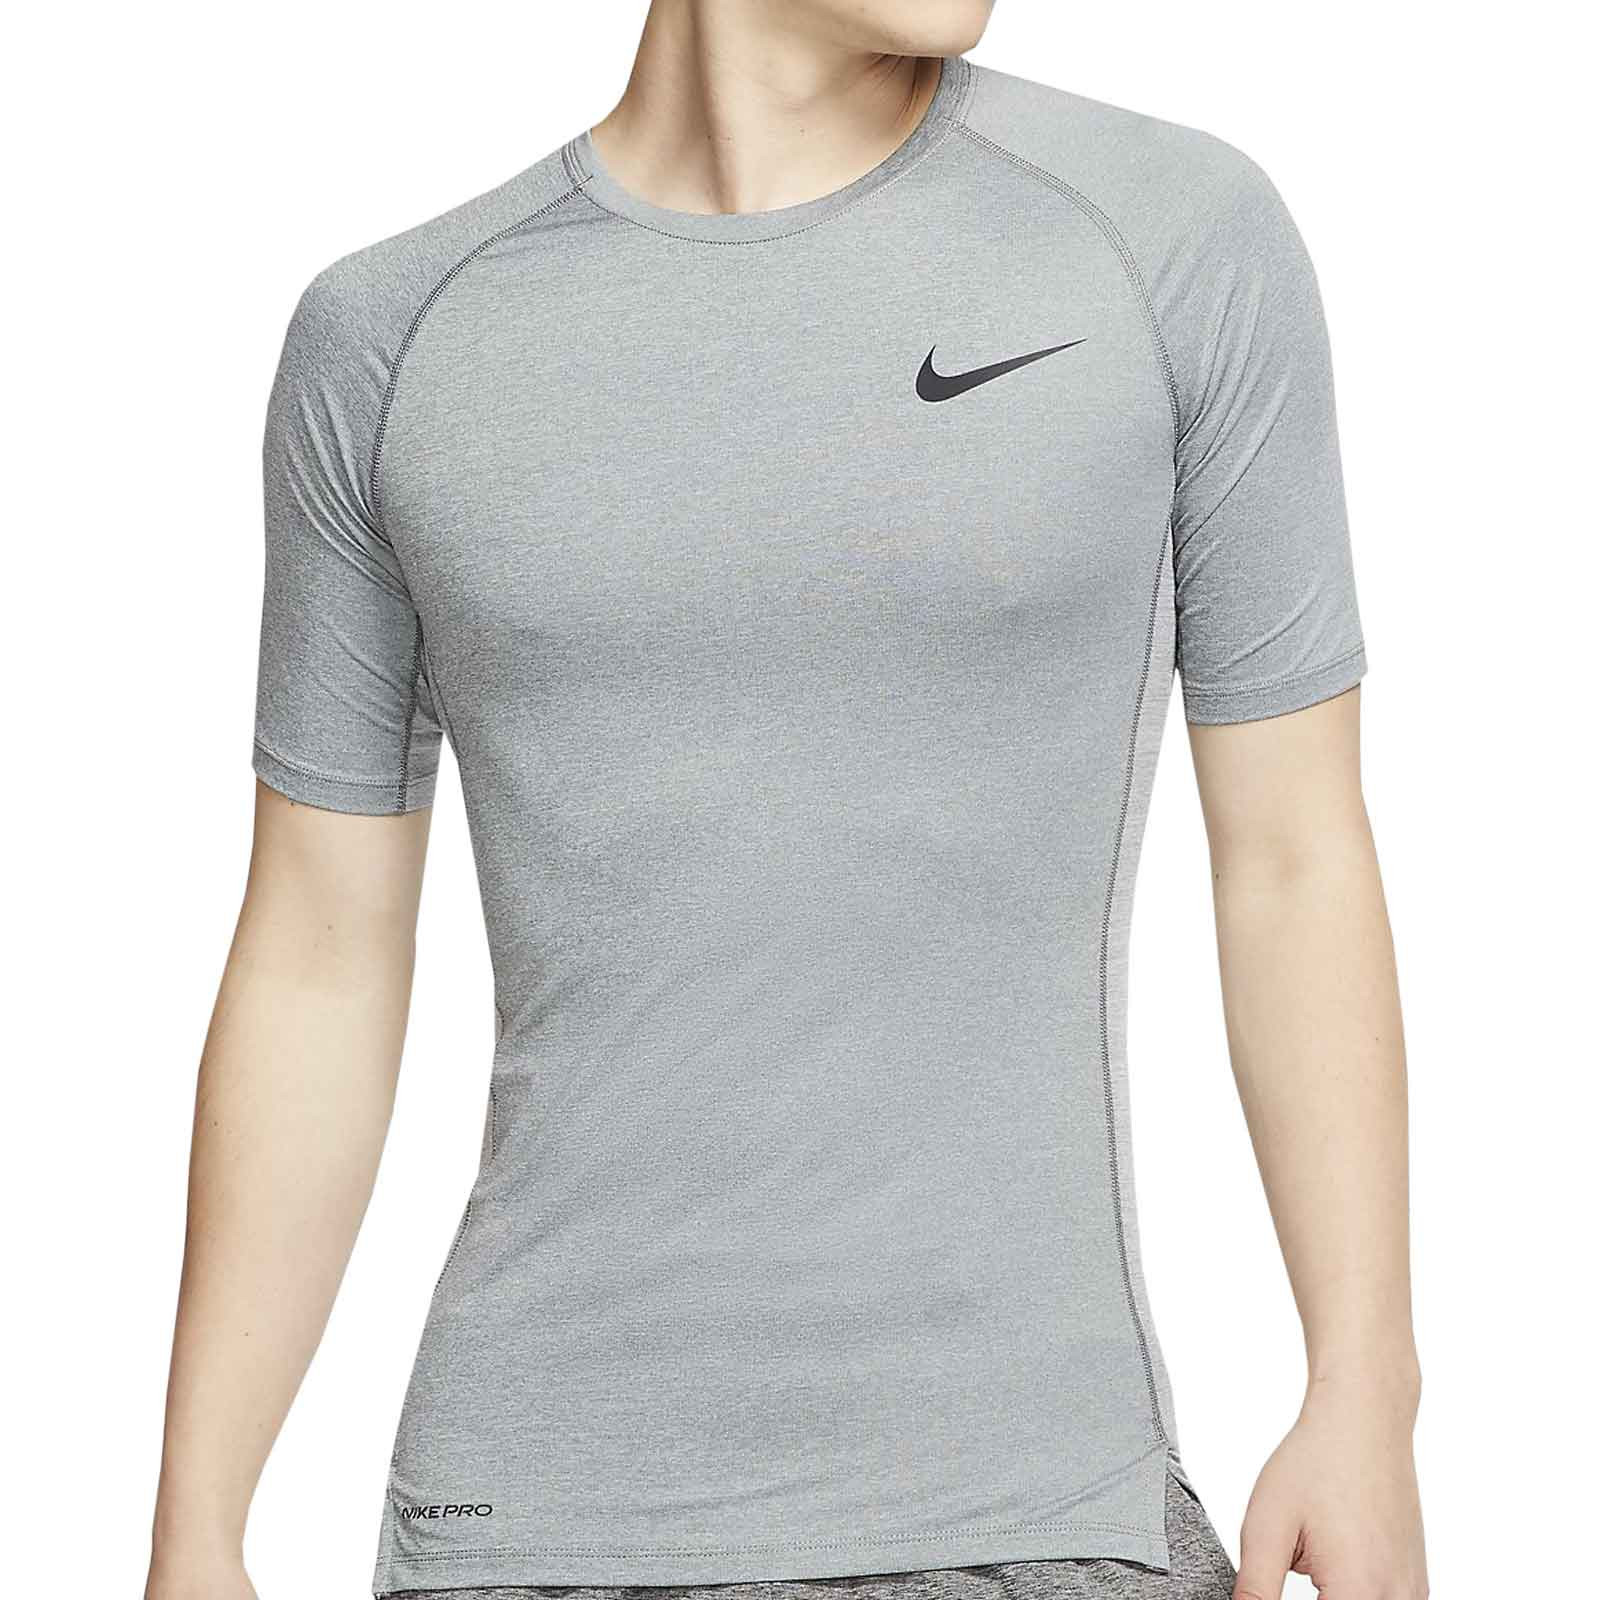 Puro Chorrito Contador Camiseta interior térmica Nike Pro gris | futbolmania